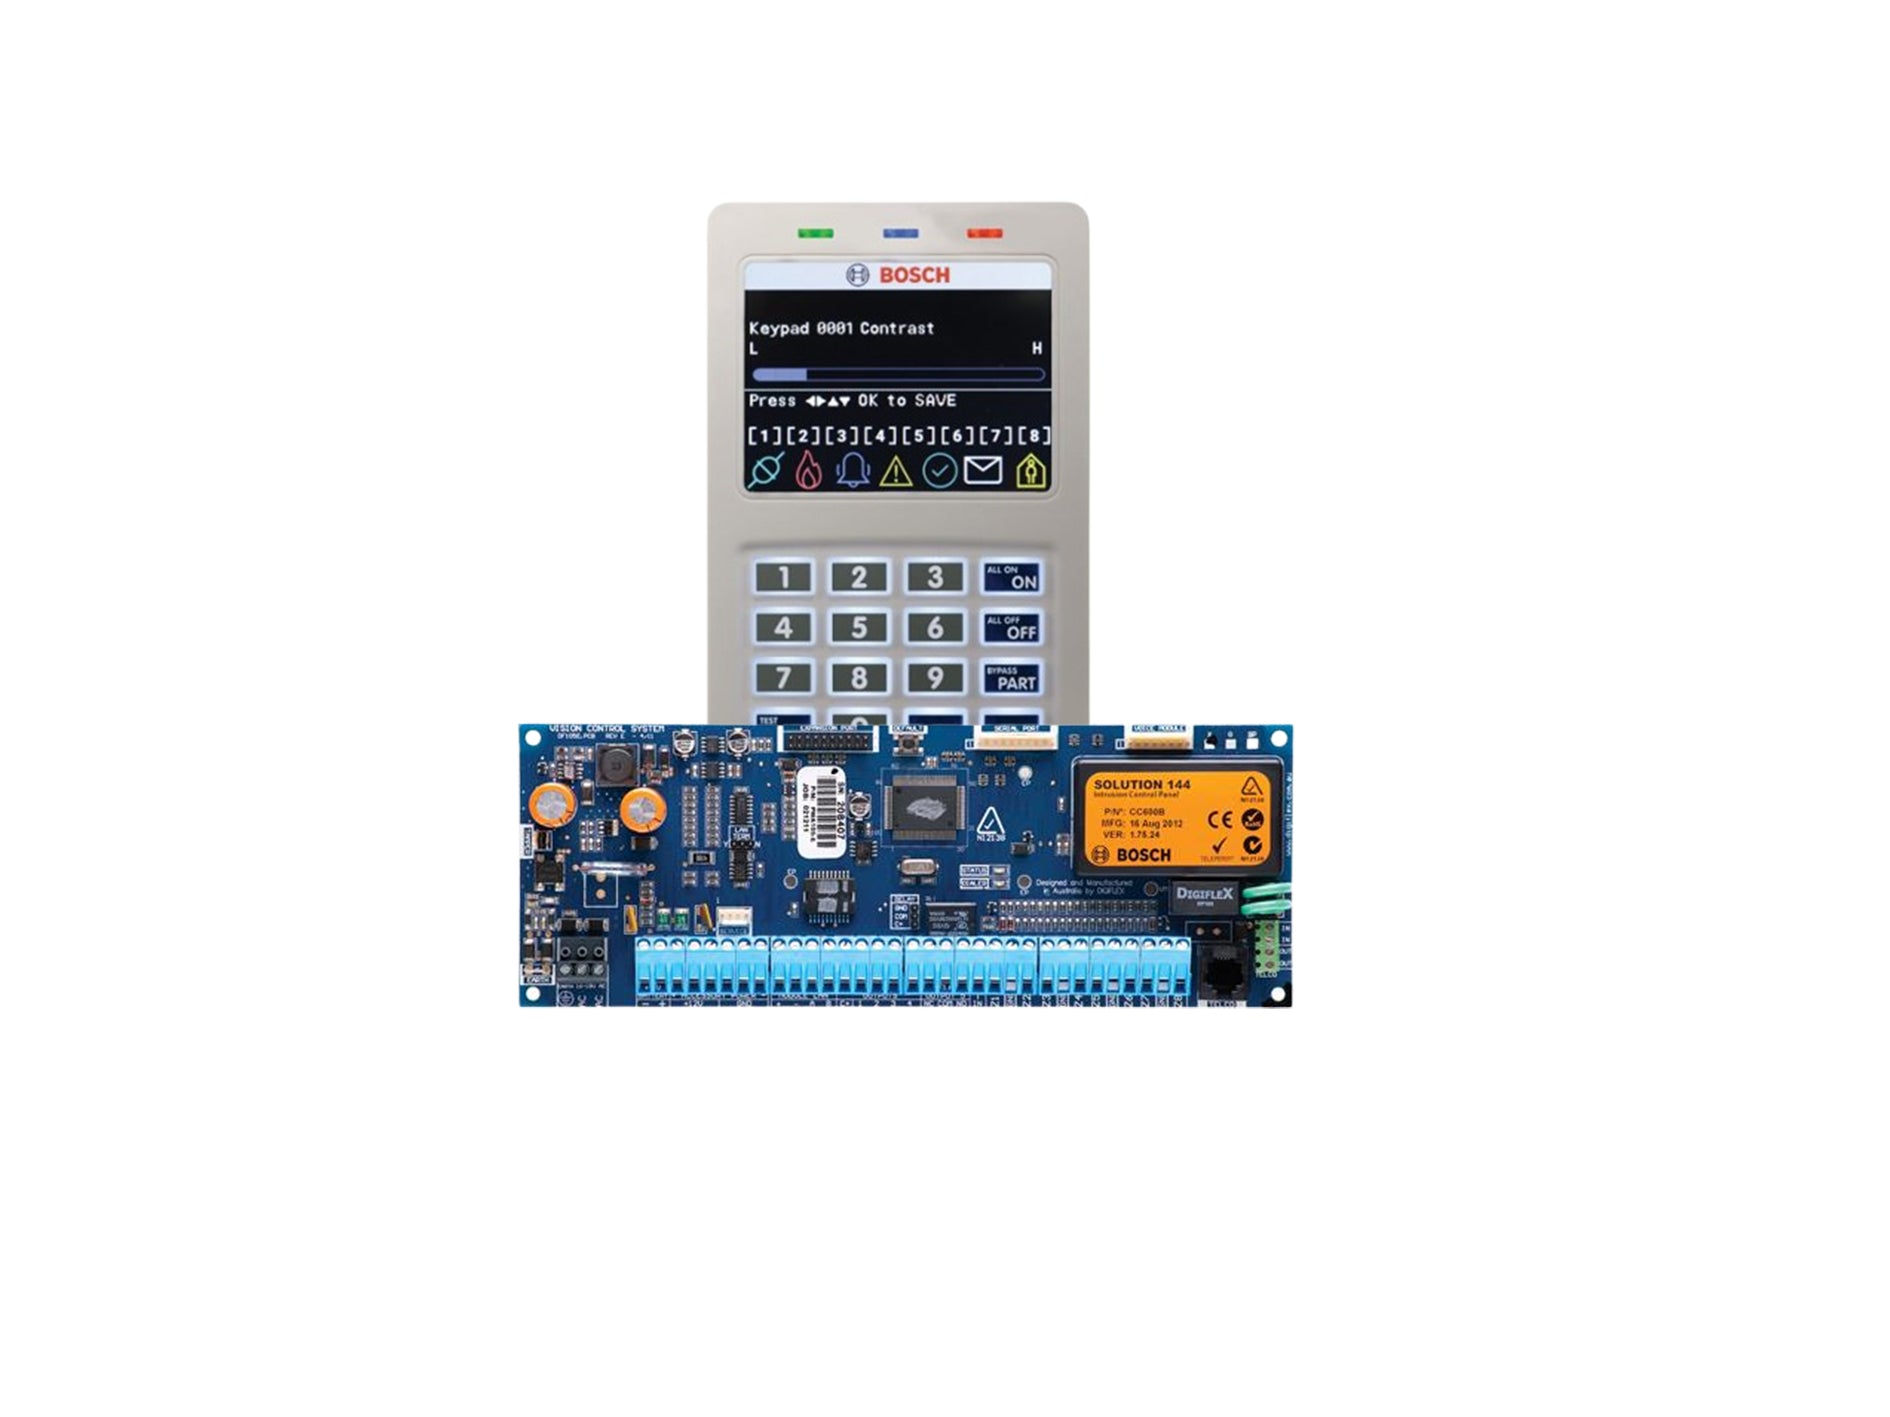 BOSCH, Solution 6000, Control panel PCB + WHITE WiFi key pad